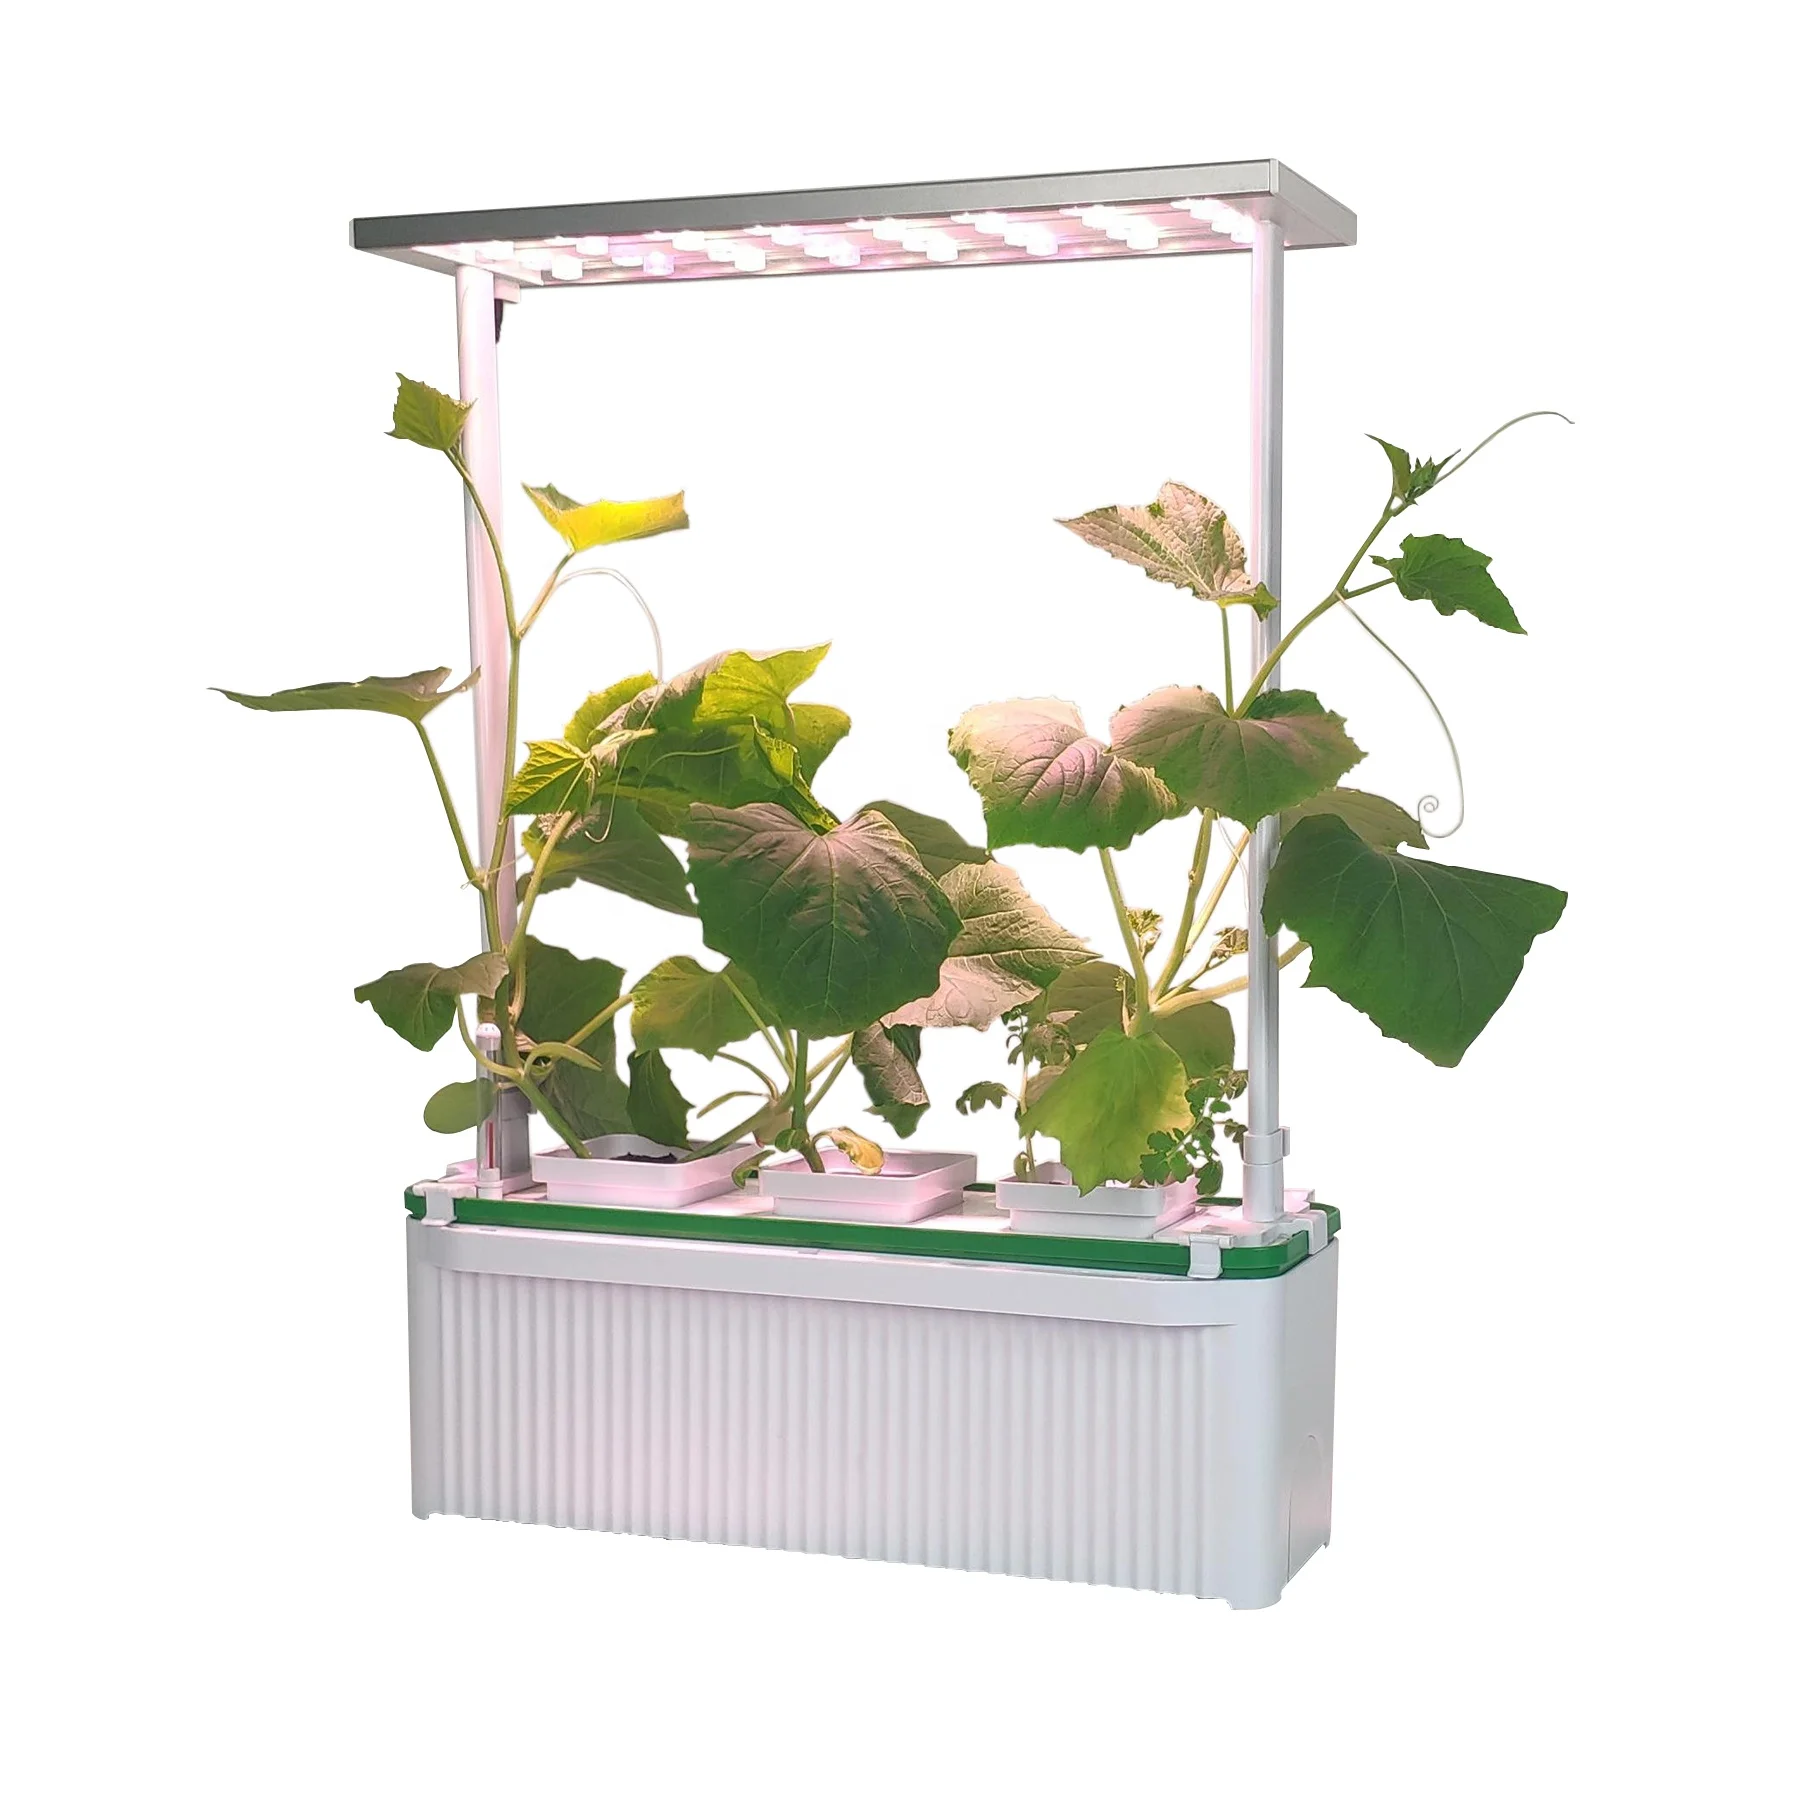 

indoor home planter plant smart led light garden grow net pot hydroponic growing diy kit garden hydroponic grow tower system